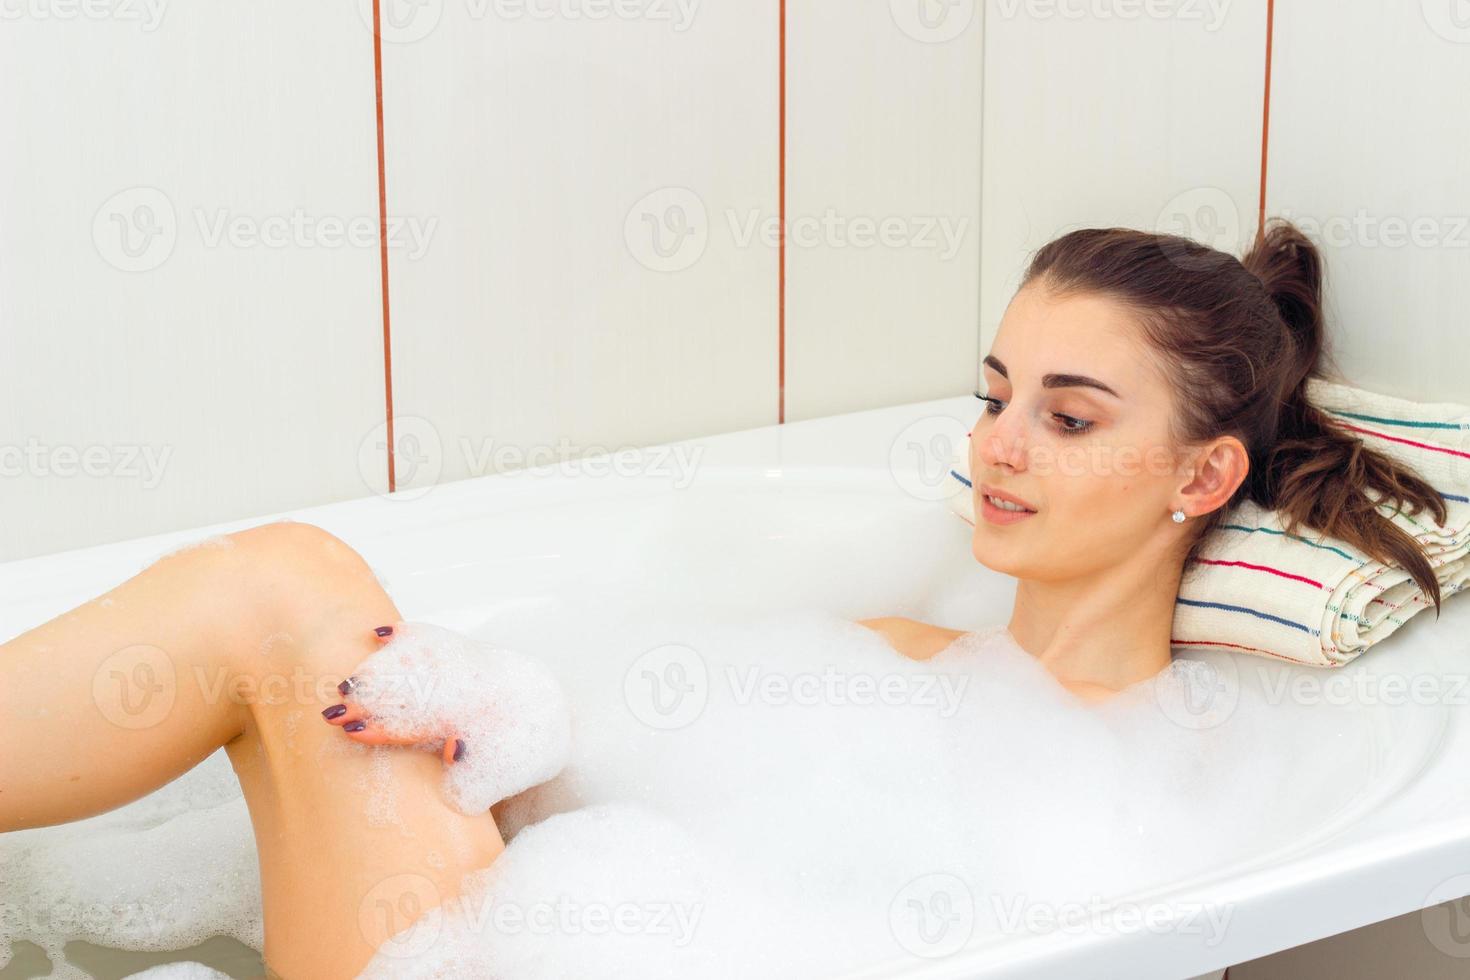 brian fiore recommends Girls In Bath Tub